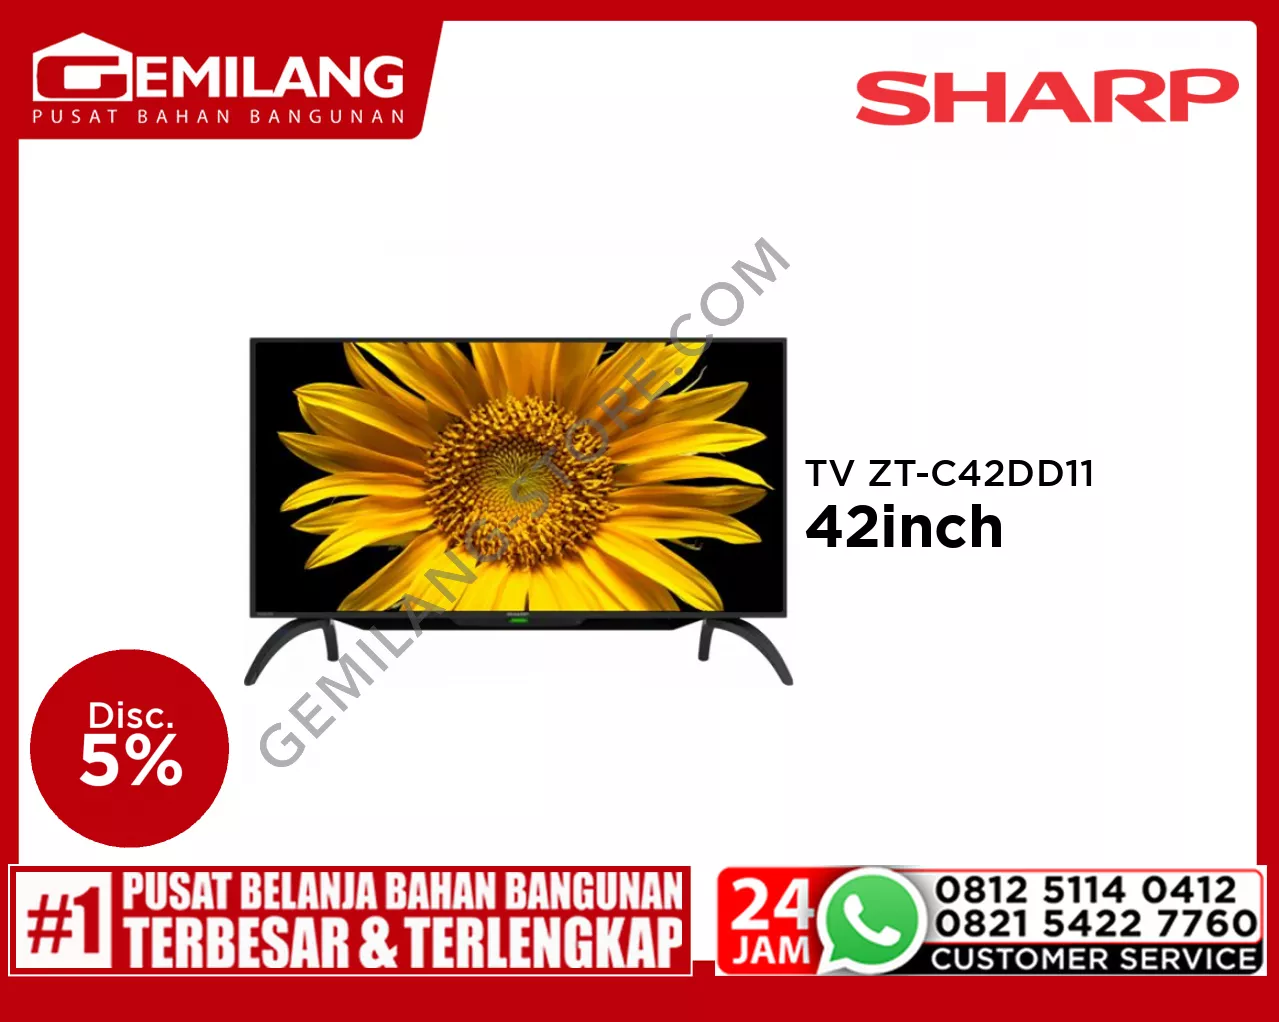 SHARP TV ZT-C42DD11 42inch